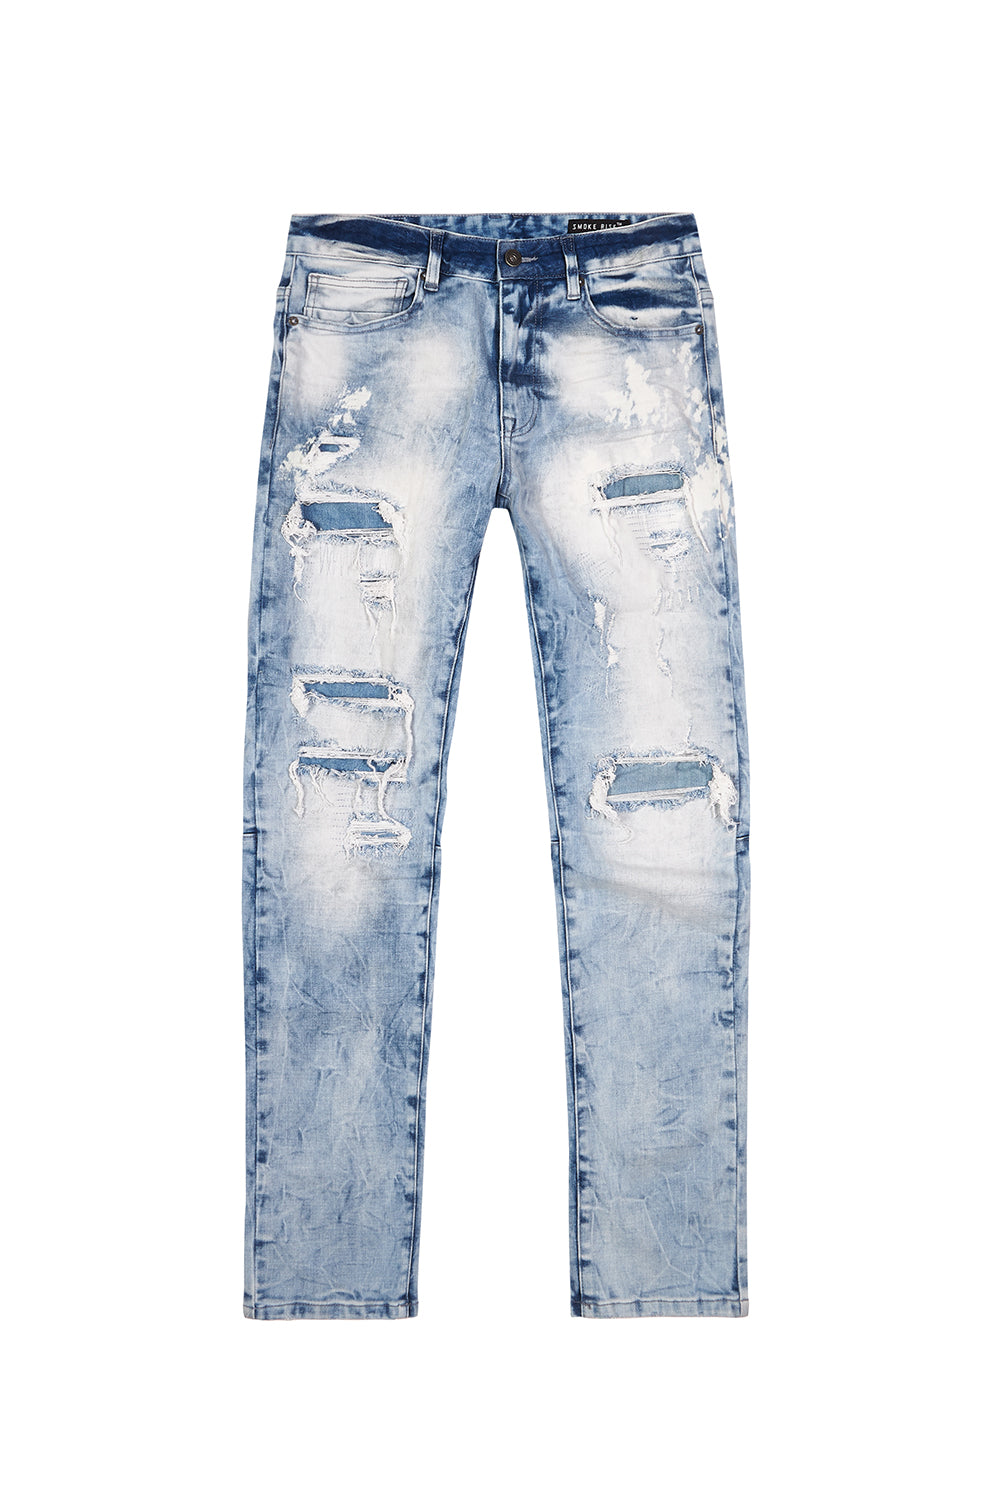 Urbano Fashion Mens Light Blue Slim Fit Mild DistressedTorn Jeans  Stretchable panjean22067lblue30  Amazonin Clothing  Accessories